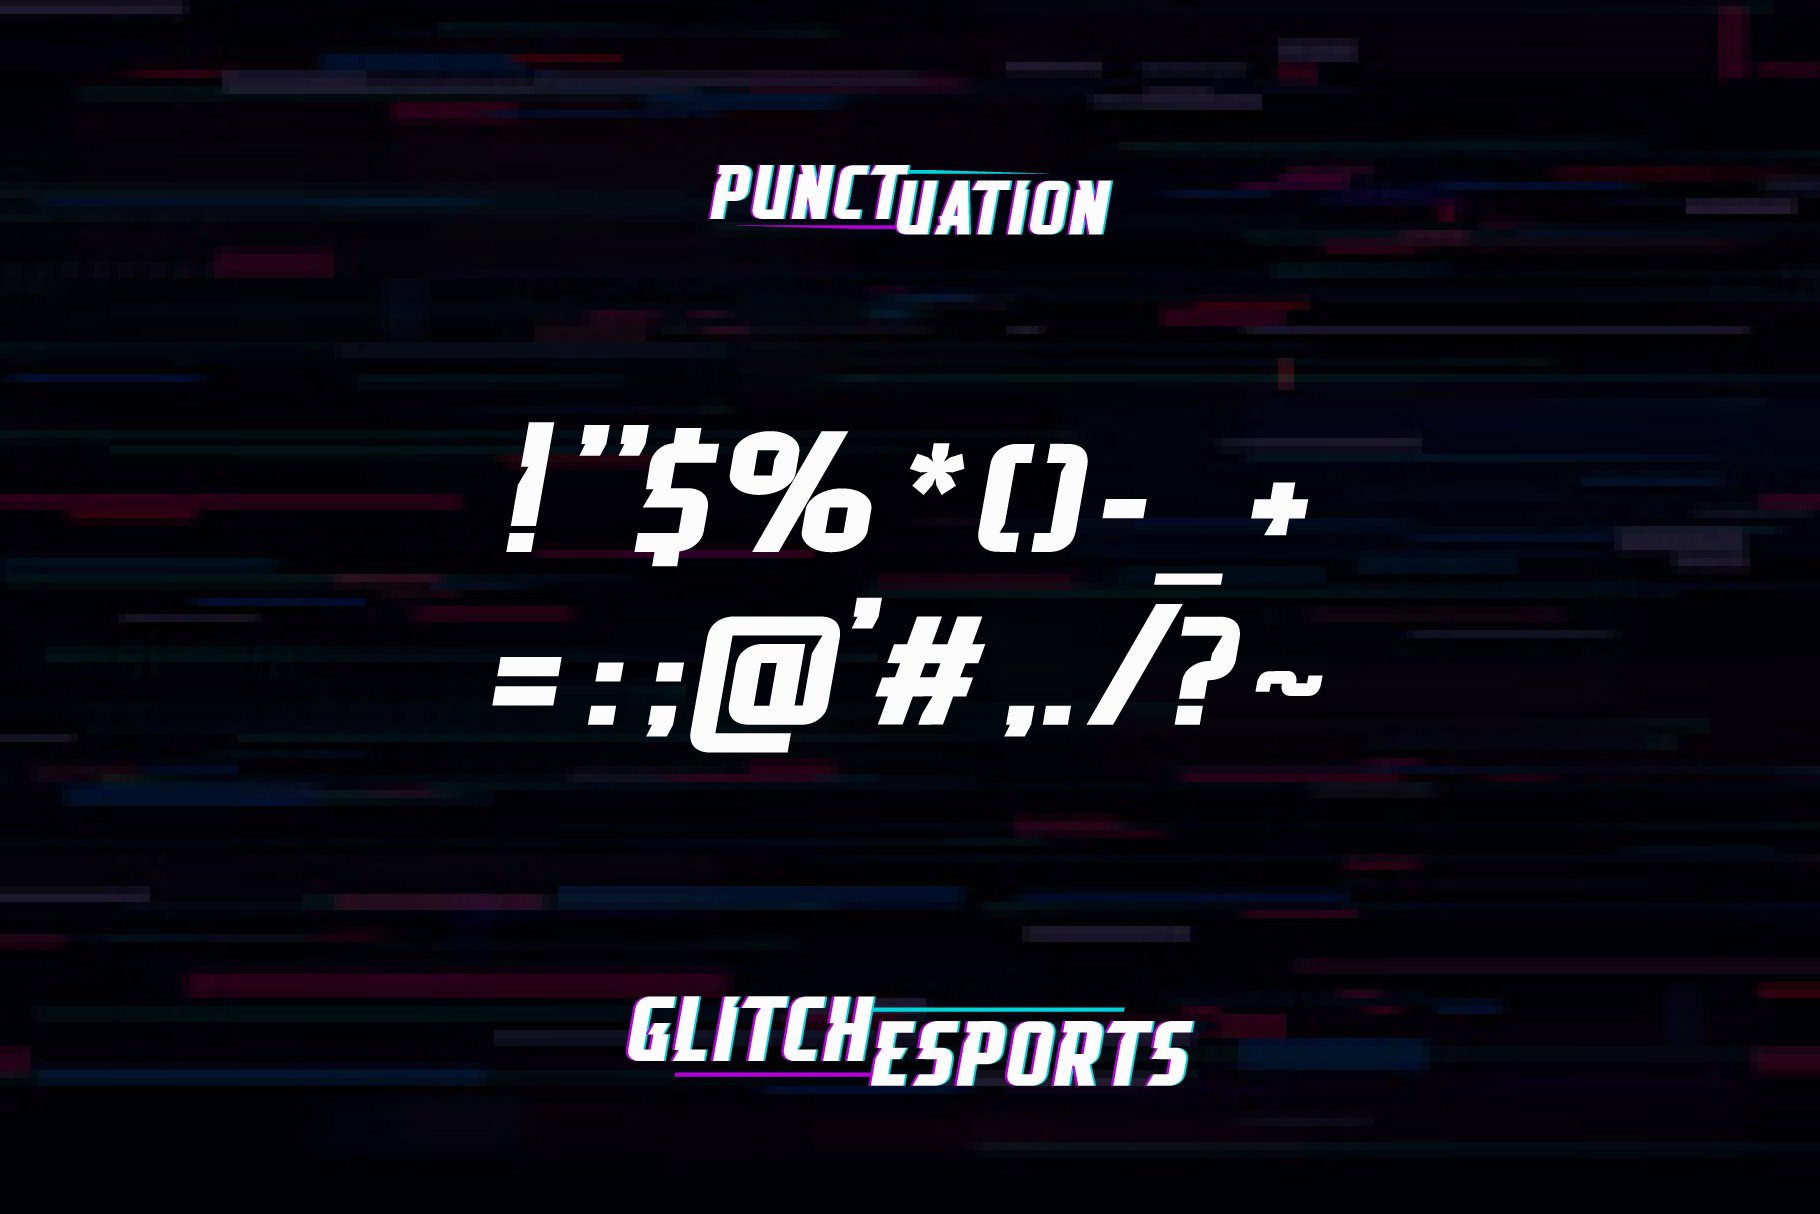 glitch esports displays punctuation 22